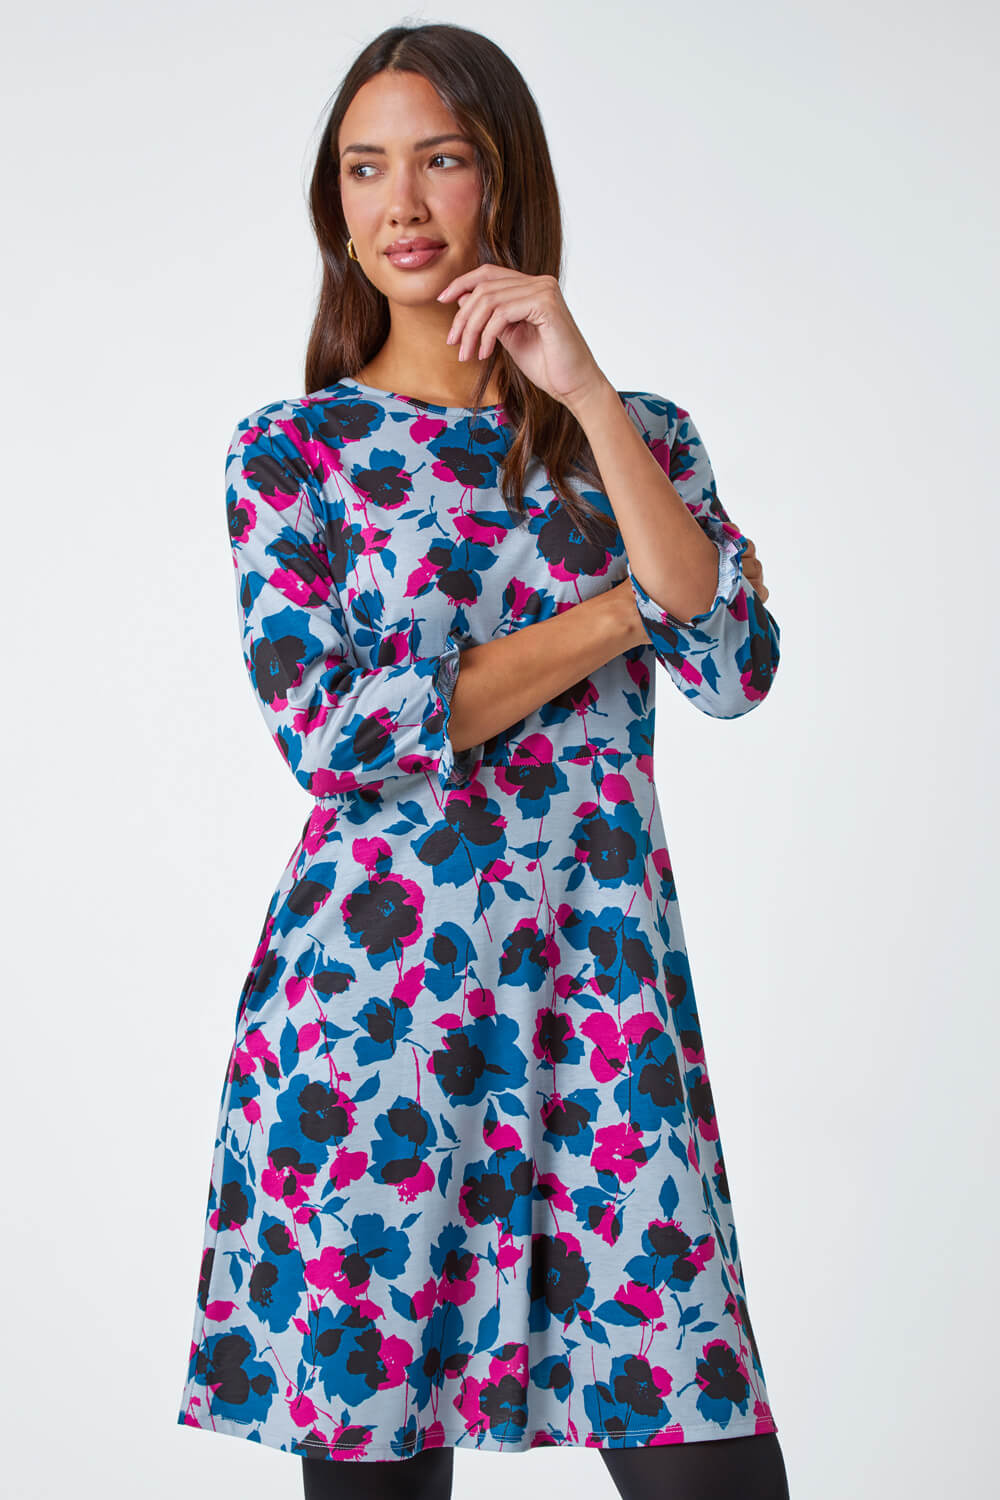 Teal Floral Print Frill Sleeve Stretch Dress | Roman UK